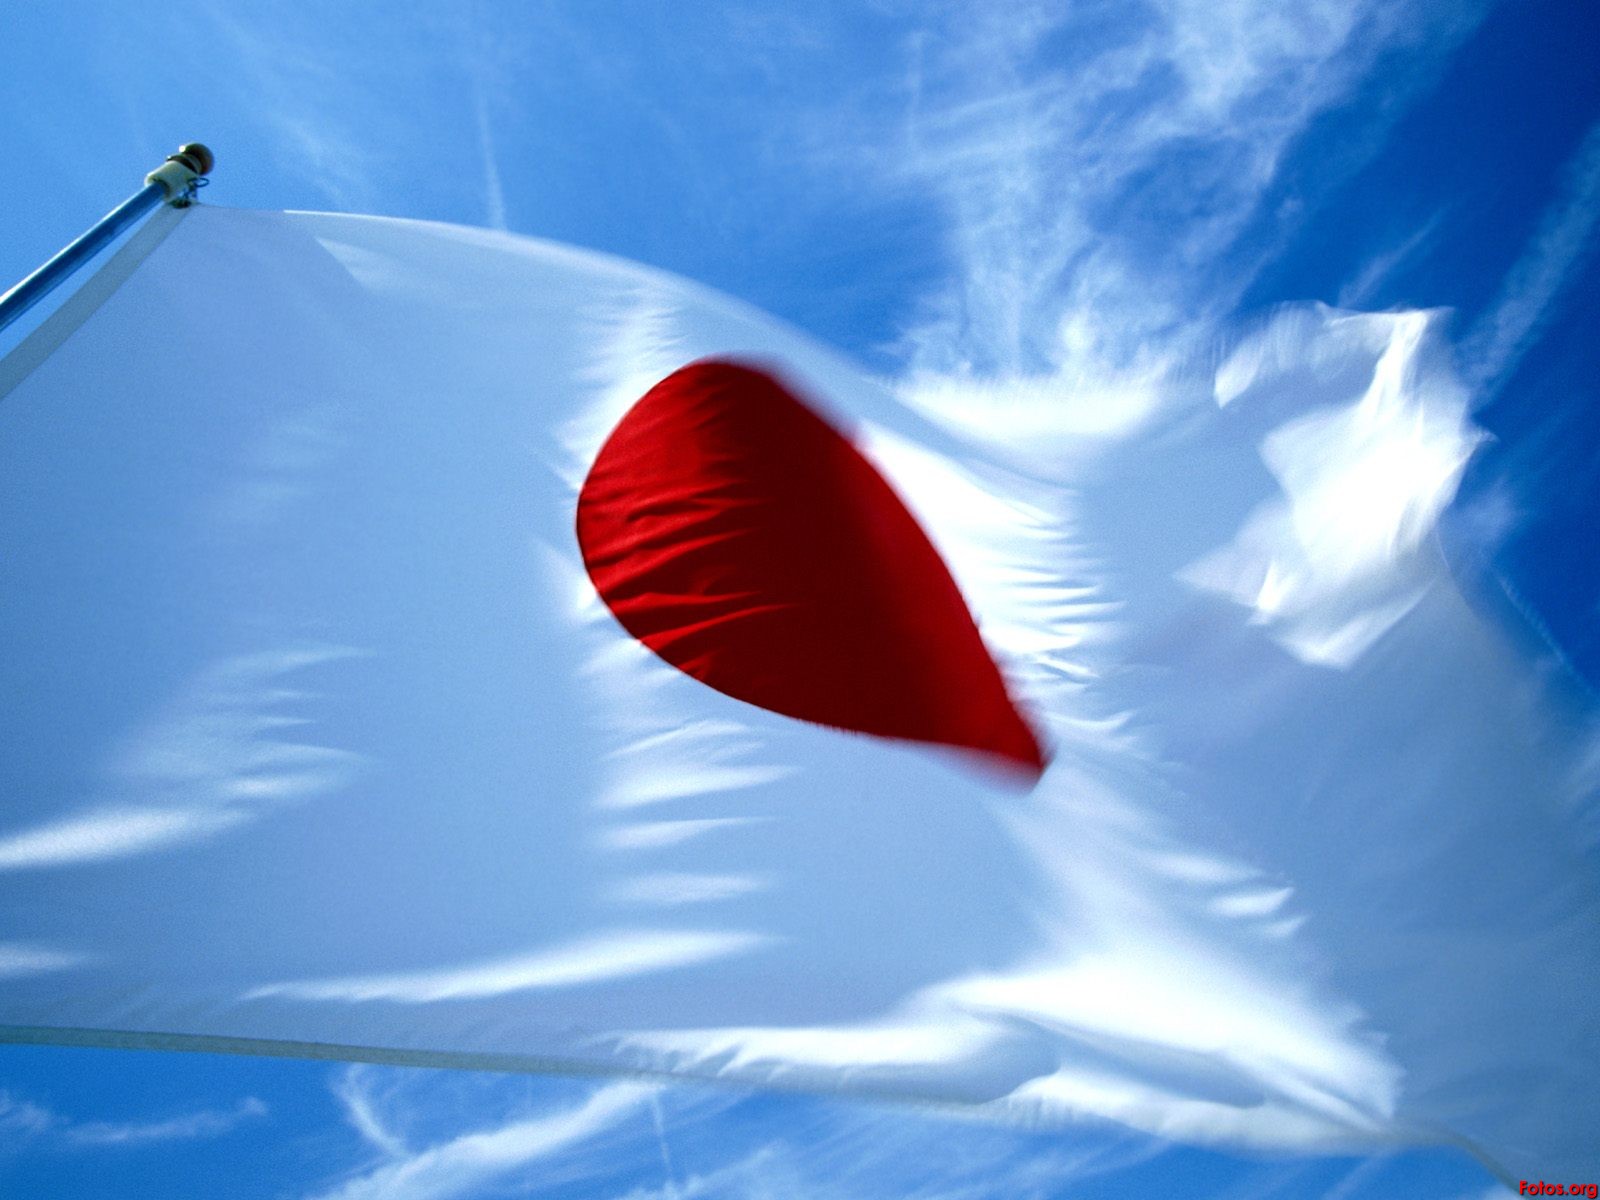 http://3.bp.blogspot.com/-uCLyP3w4j_g/UMn5KHos6UI/AAAAAAAAAto/UKT6poqlZdU/s1600/bandera-japon-wallpaper.jpg